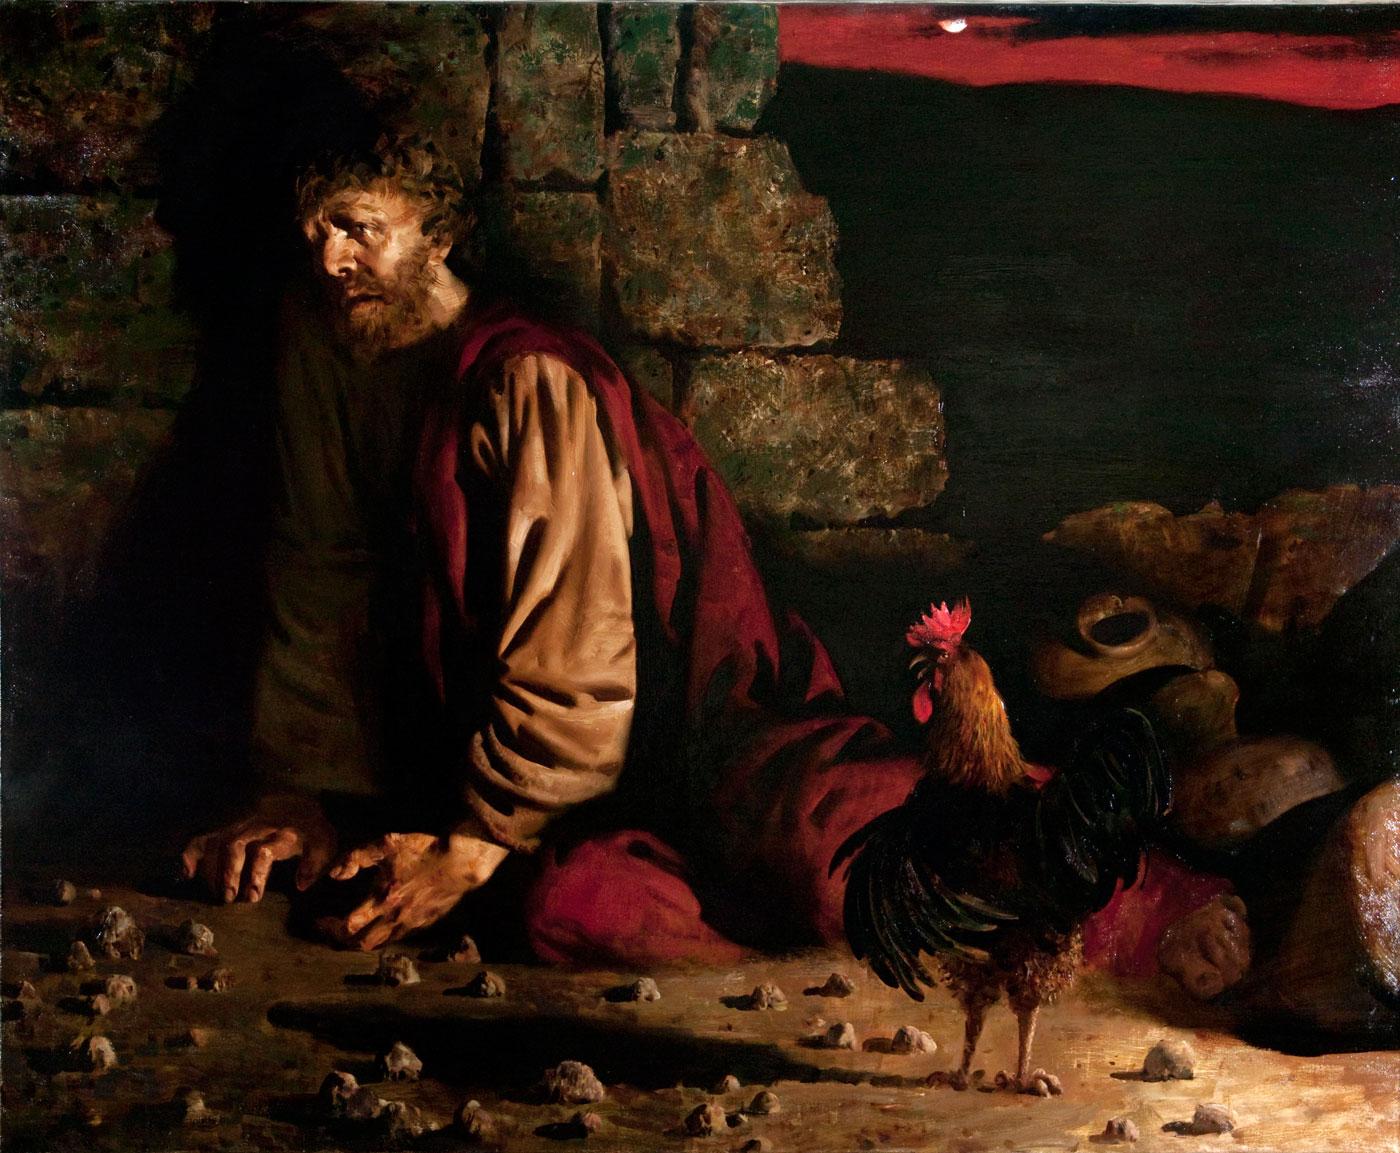 St. Peter's tears (variant). Original modern art painting